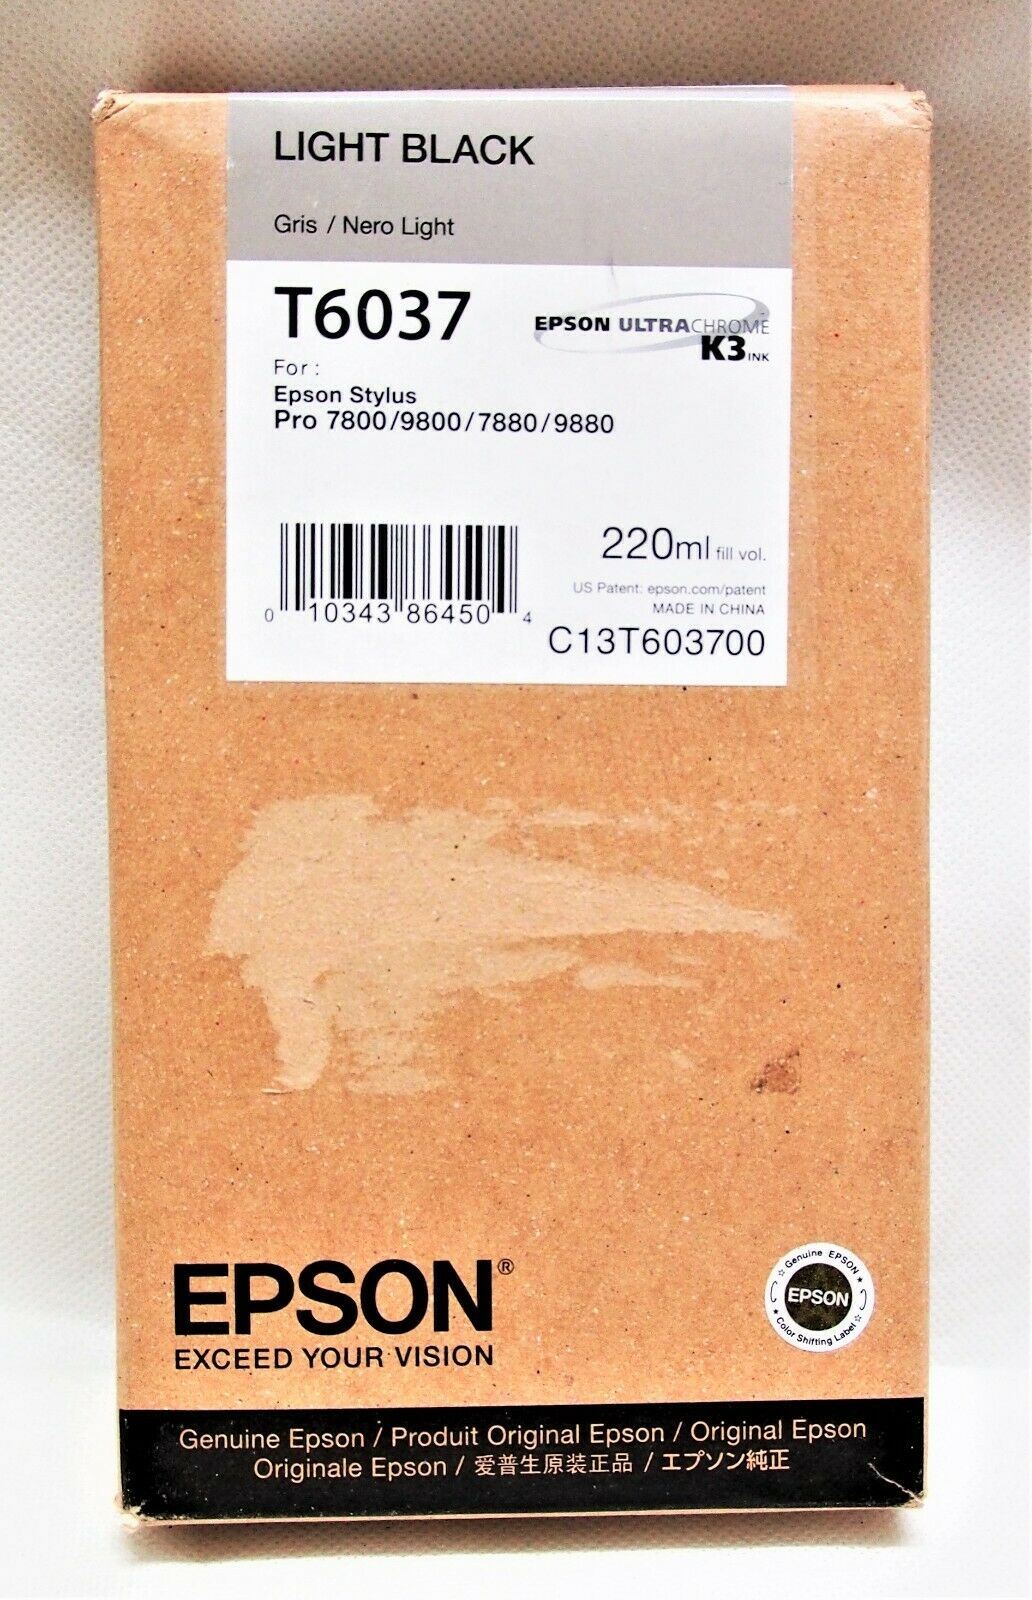 ''EPSON T6037 / C13T603700 Toner Light Black für PRO 7800 / 9800 / 7880 / 9880 N